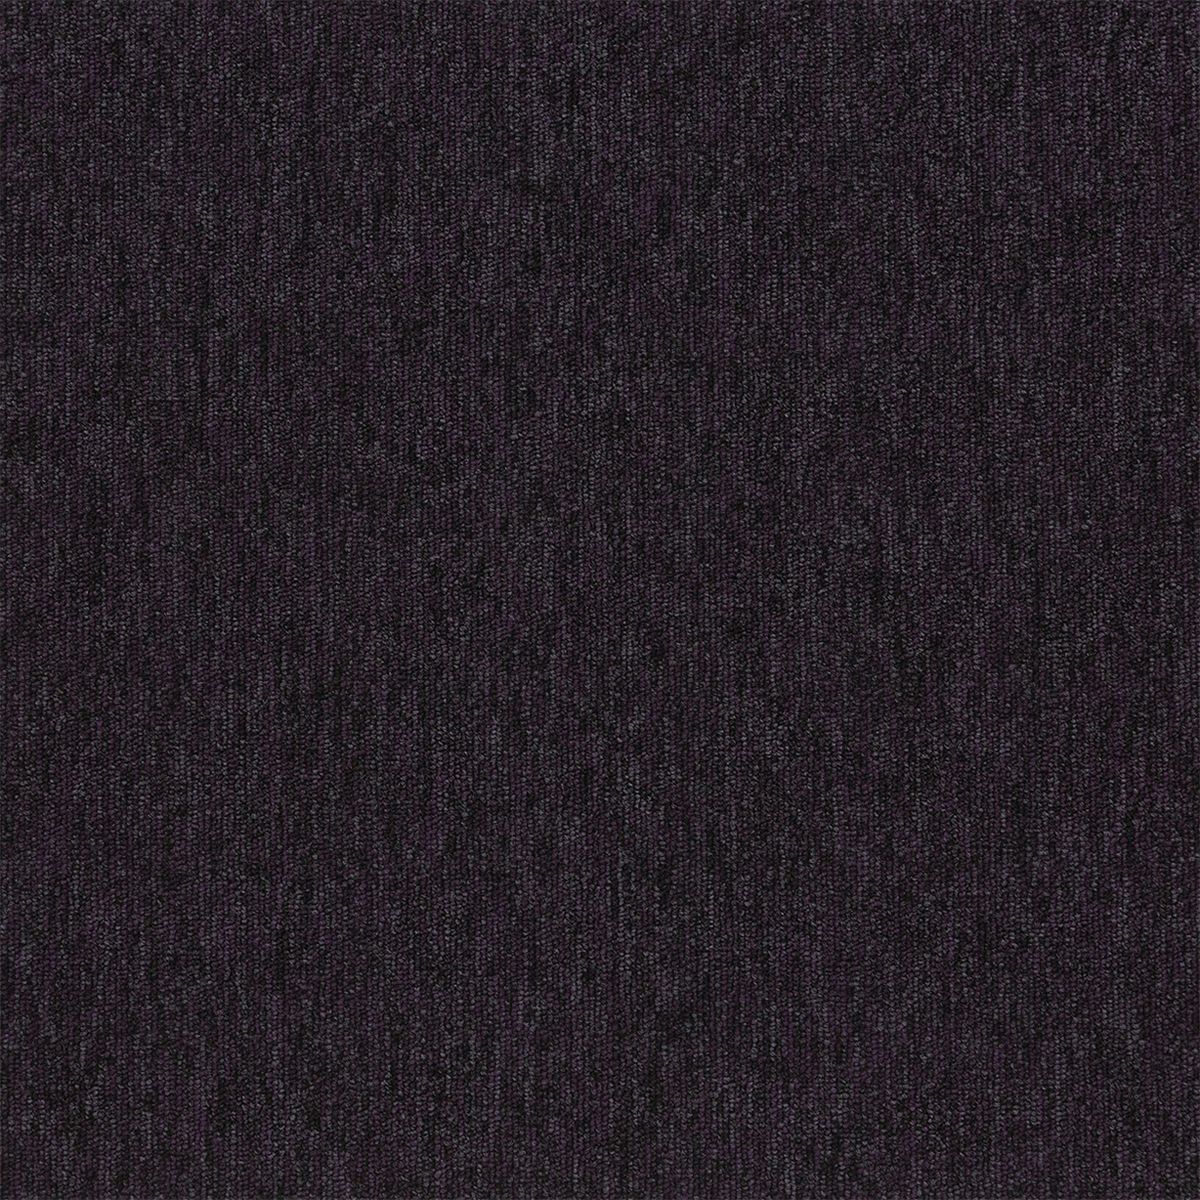 20270 pinta purple